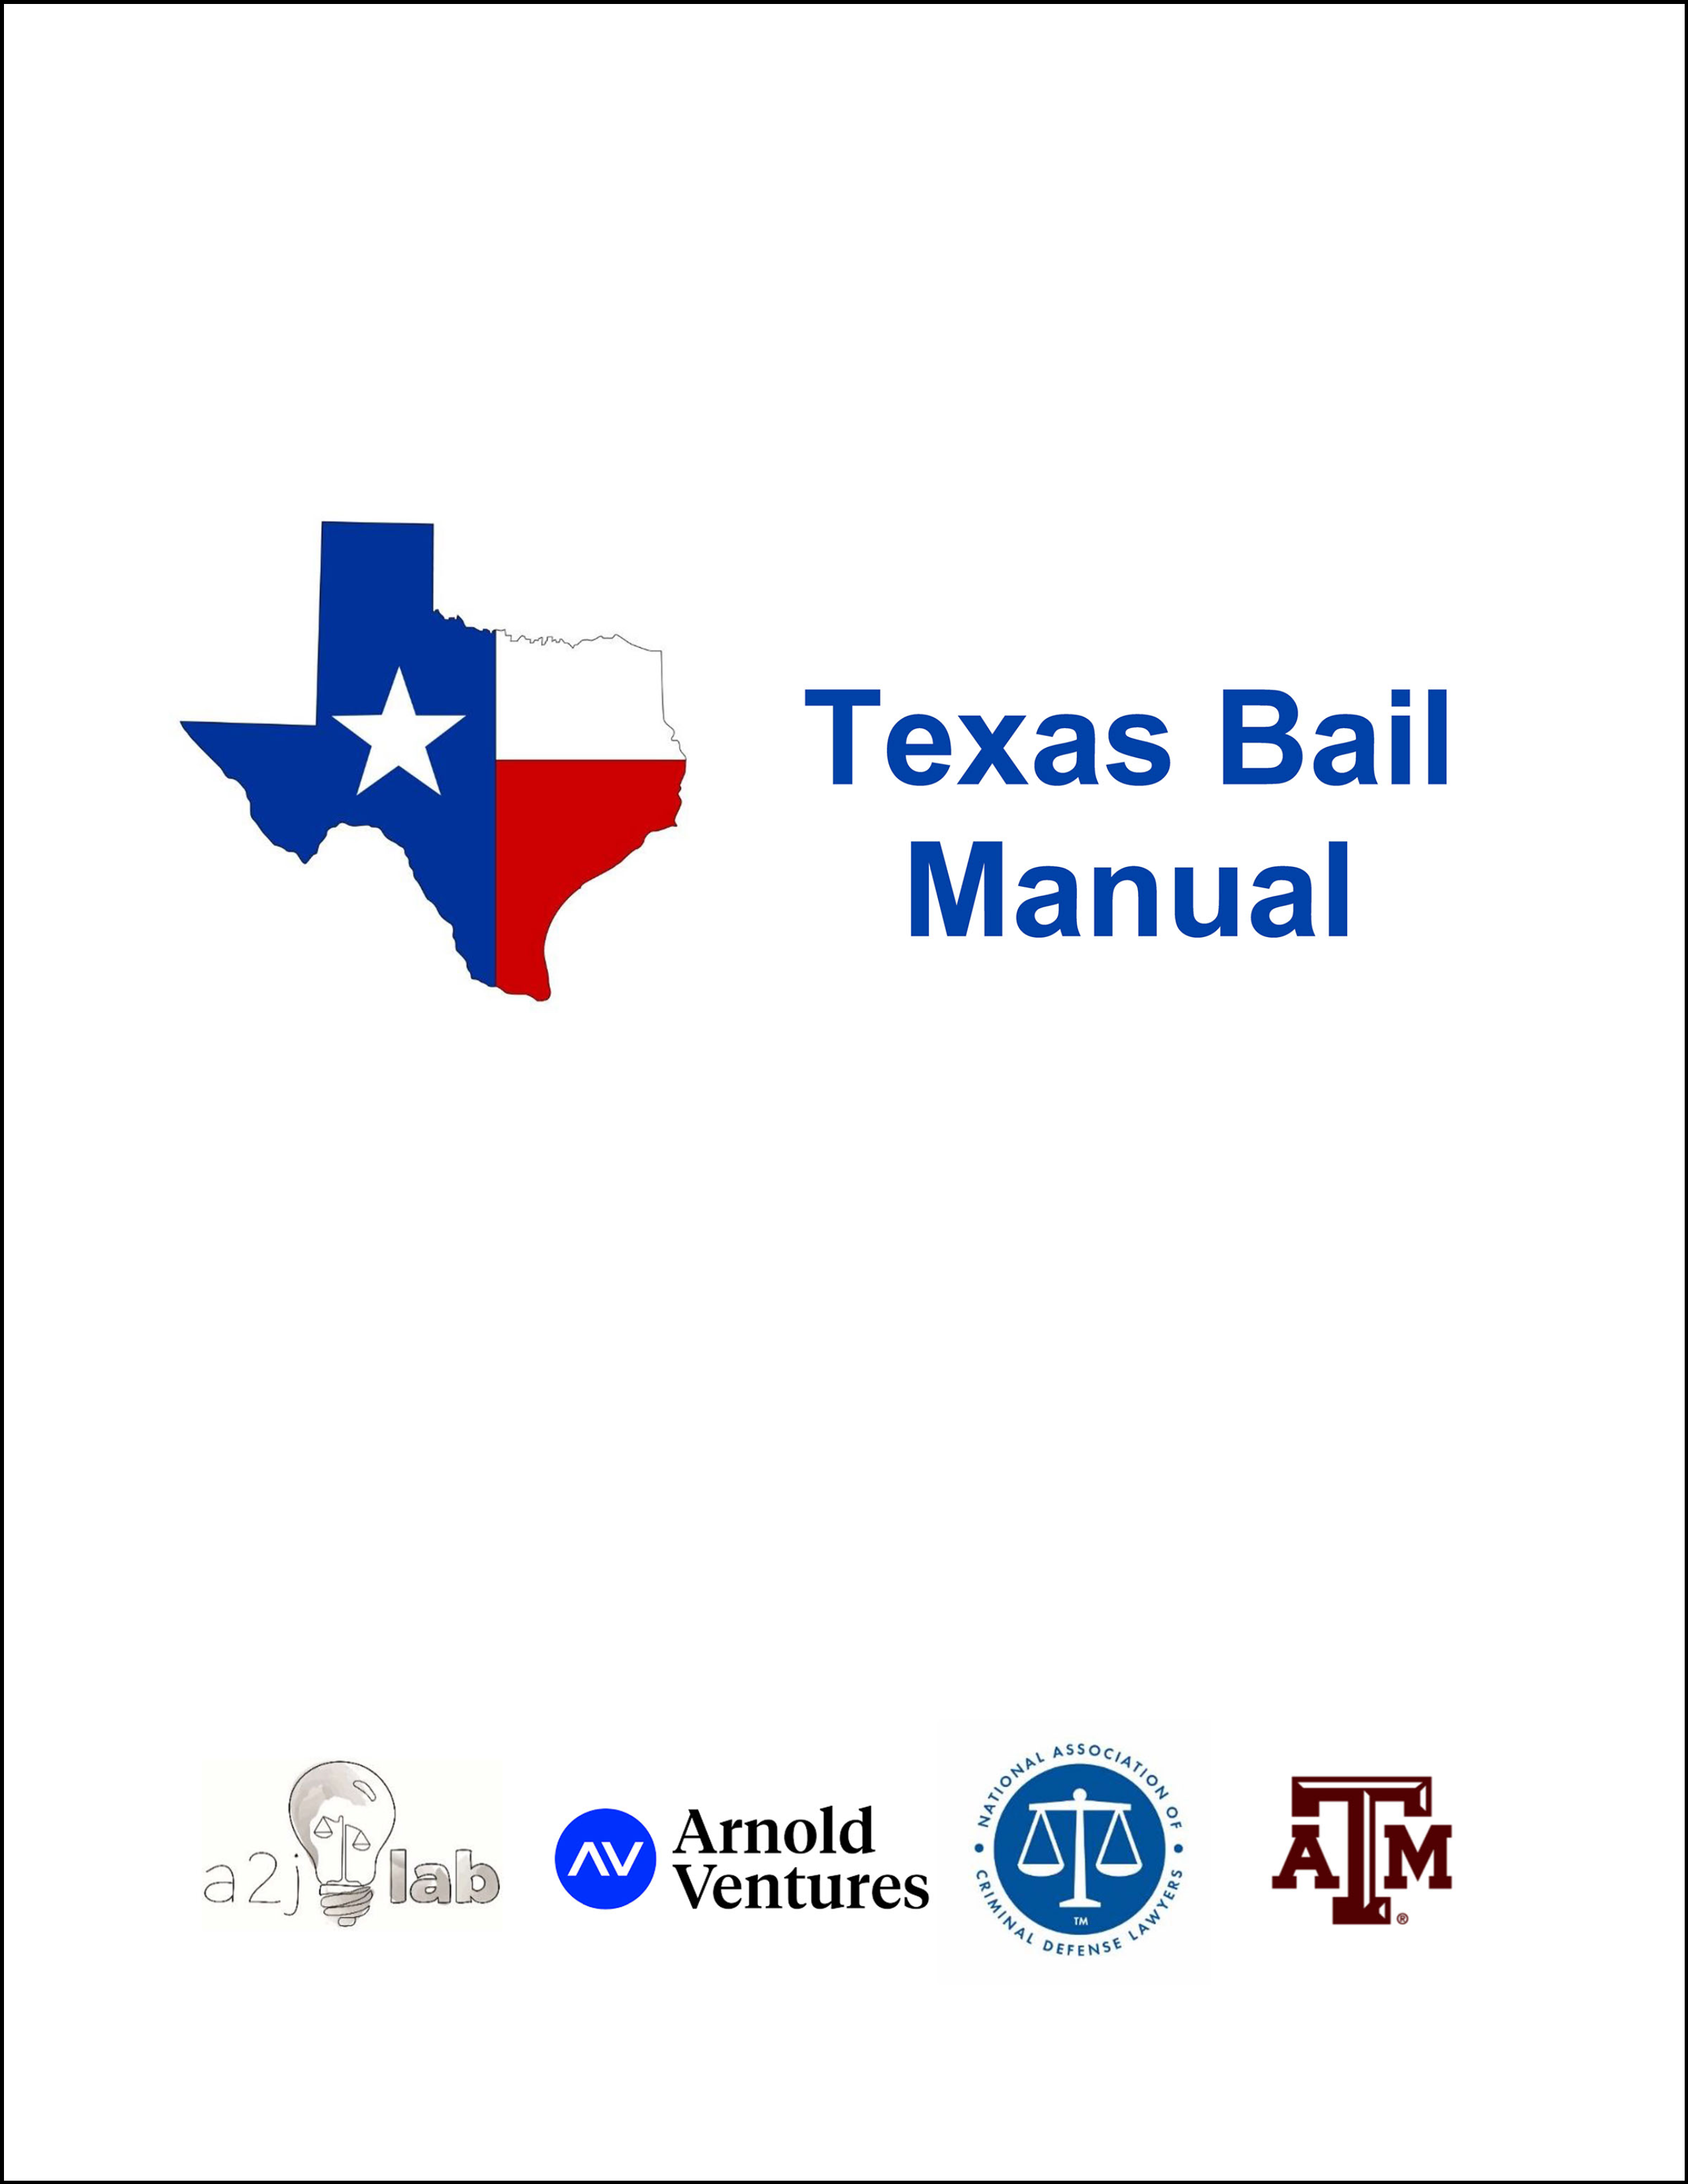 Texas Bail Manual Cover